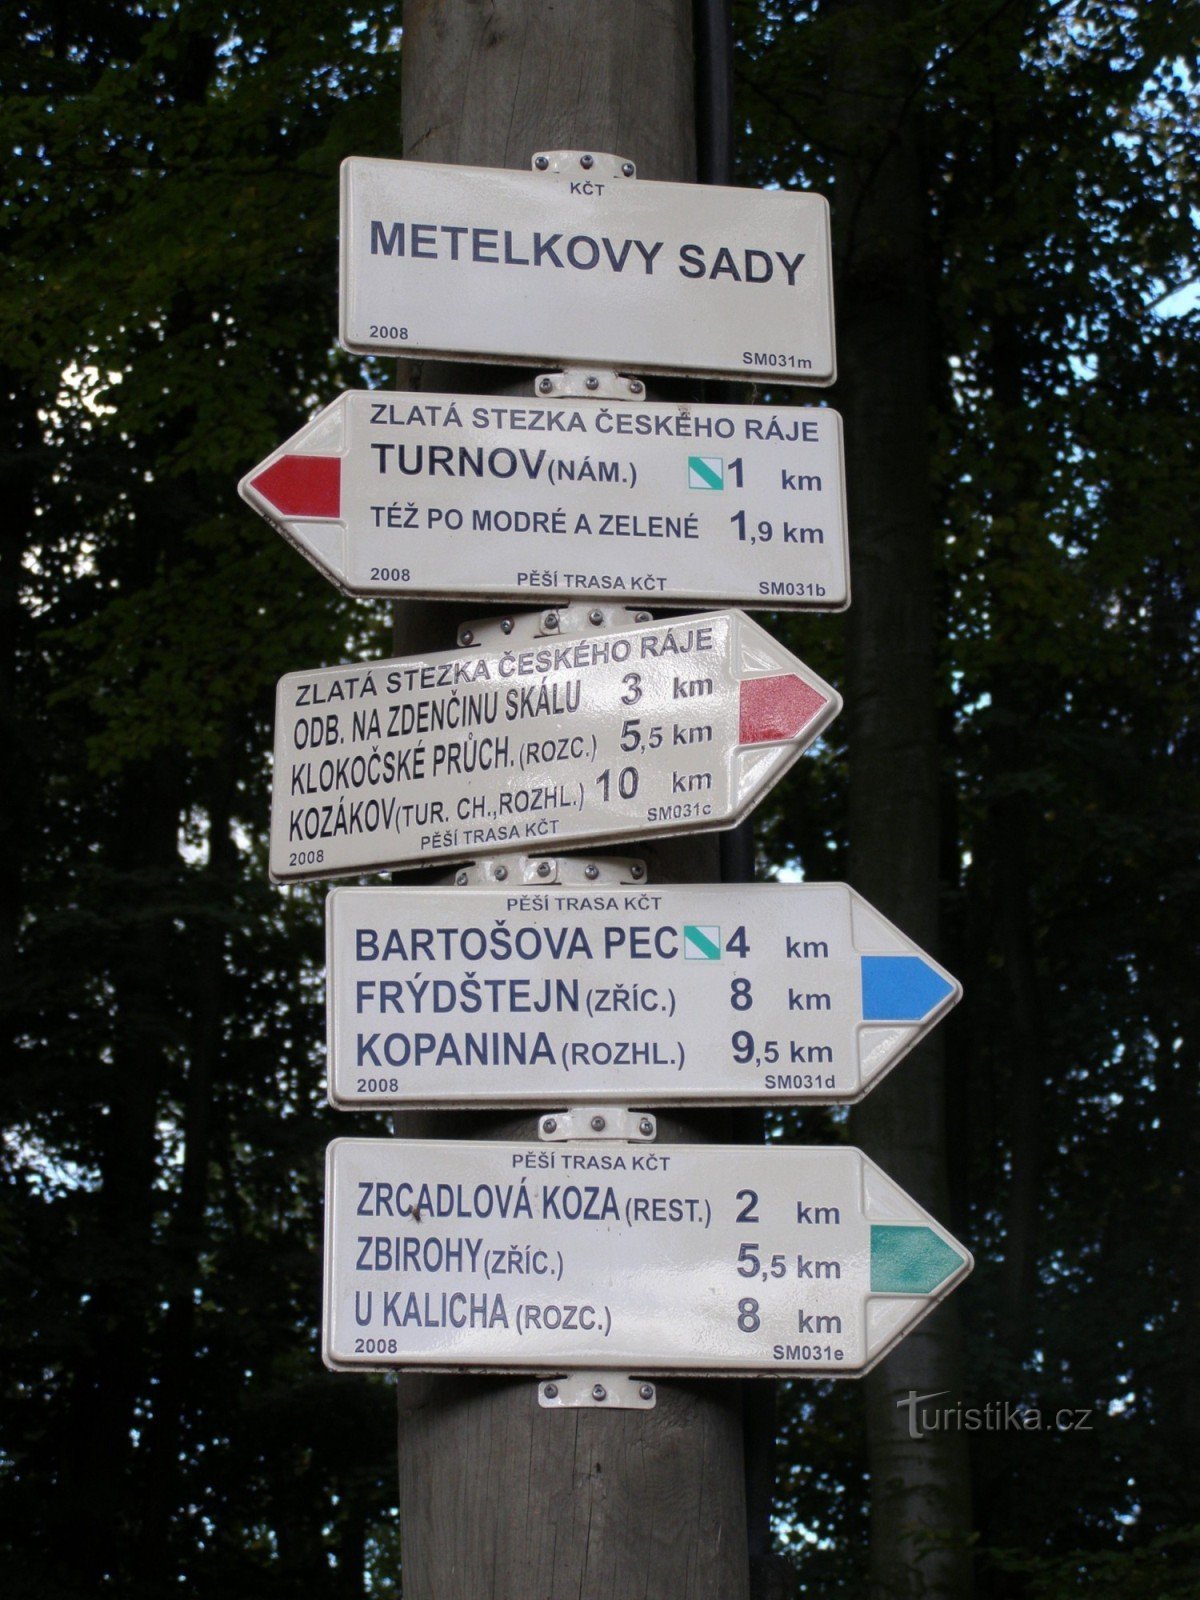 Touristenkreuzung Turnov - Metelkovy sady